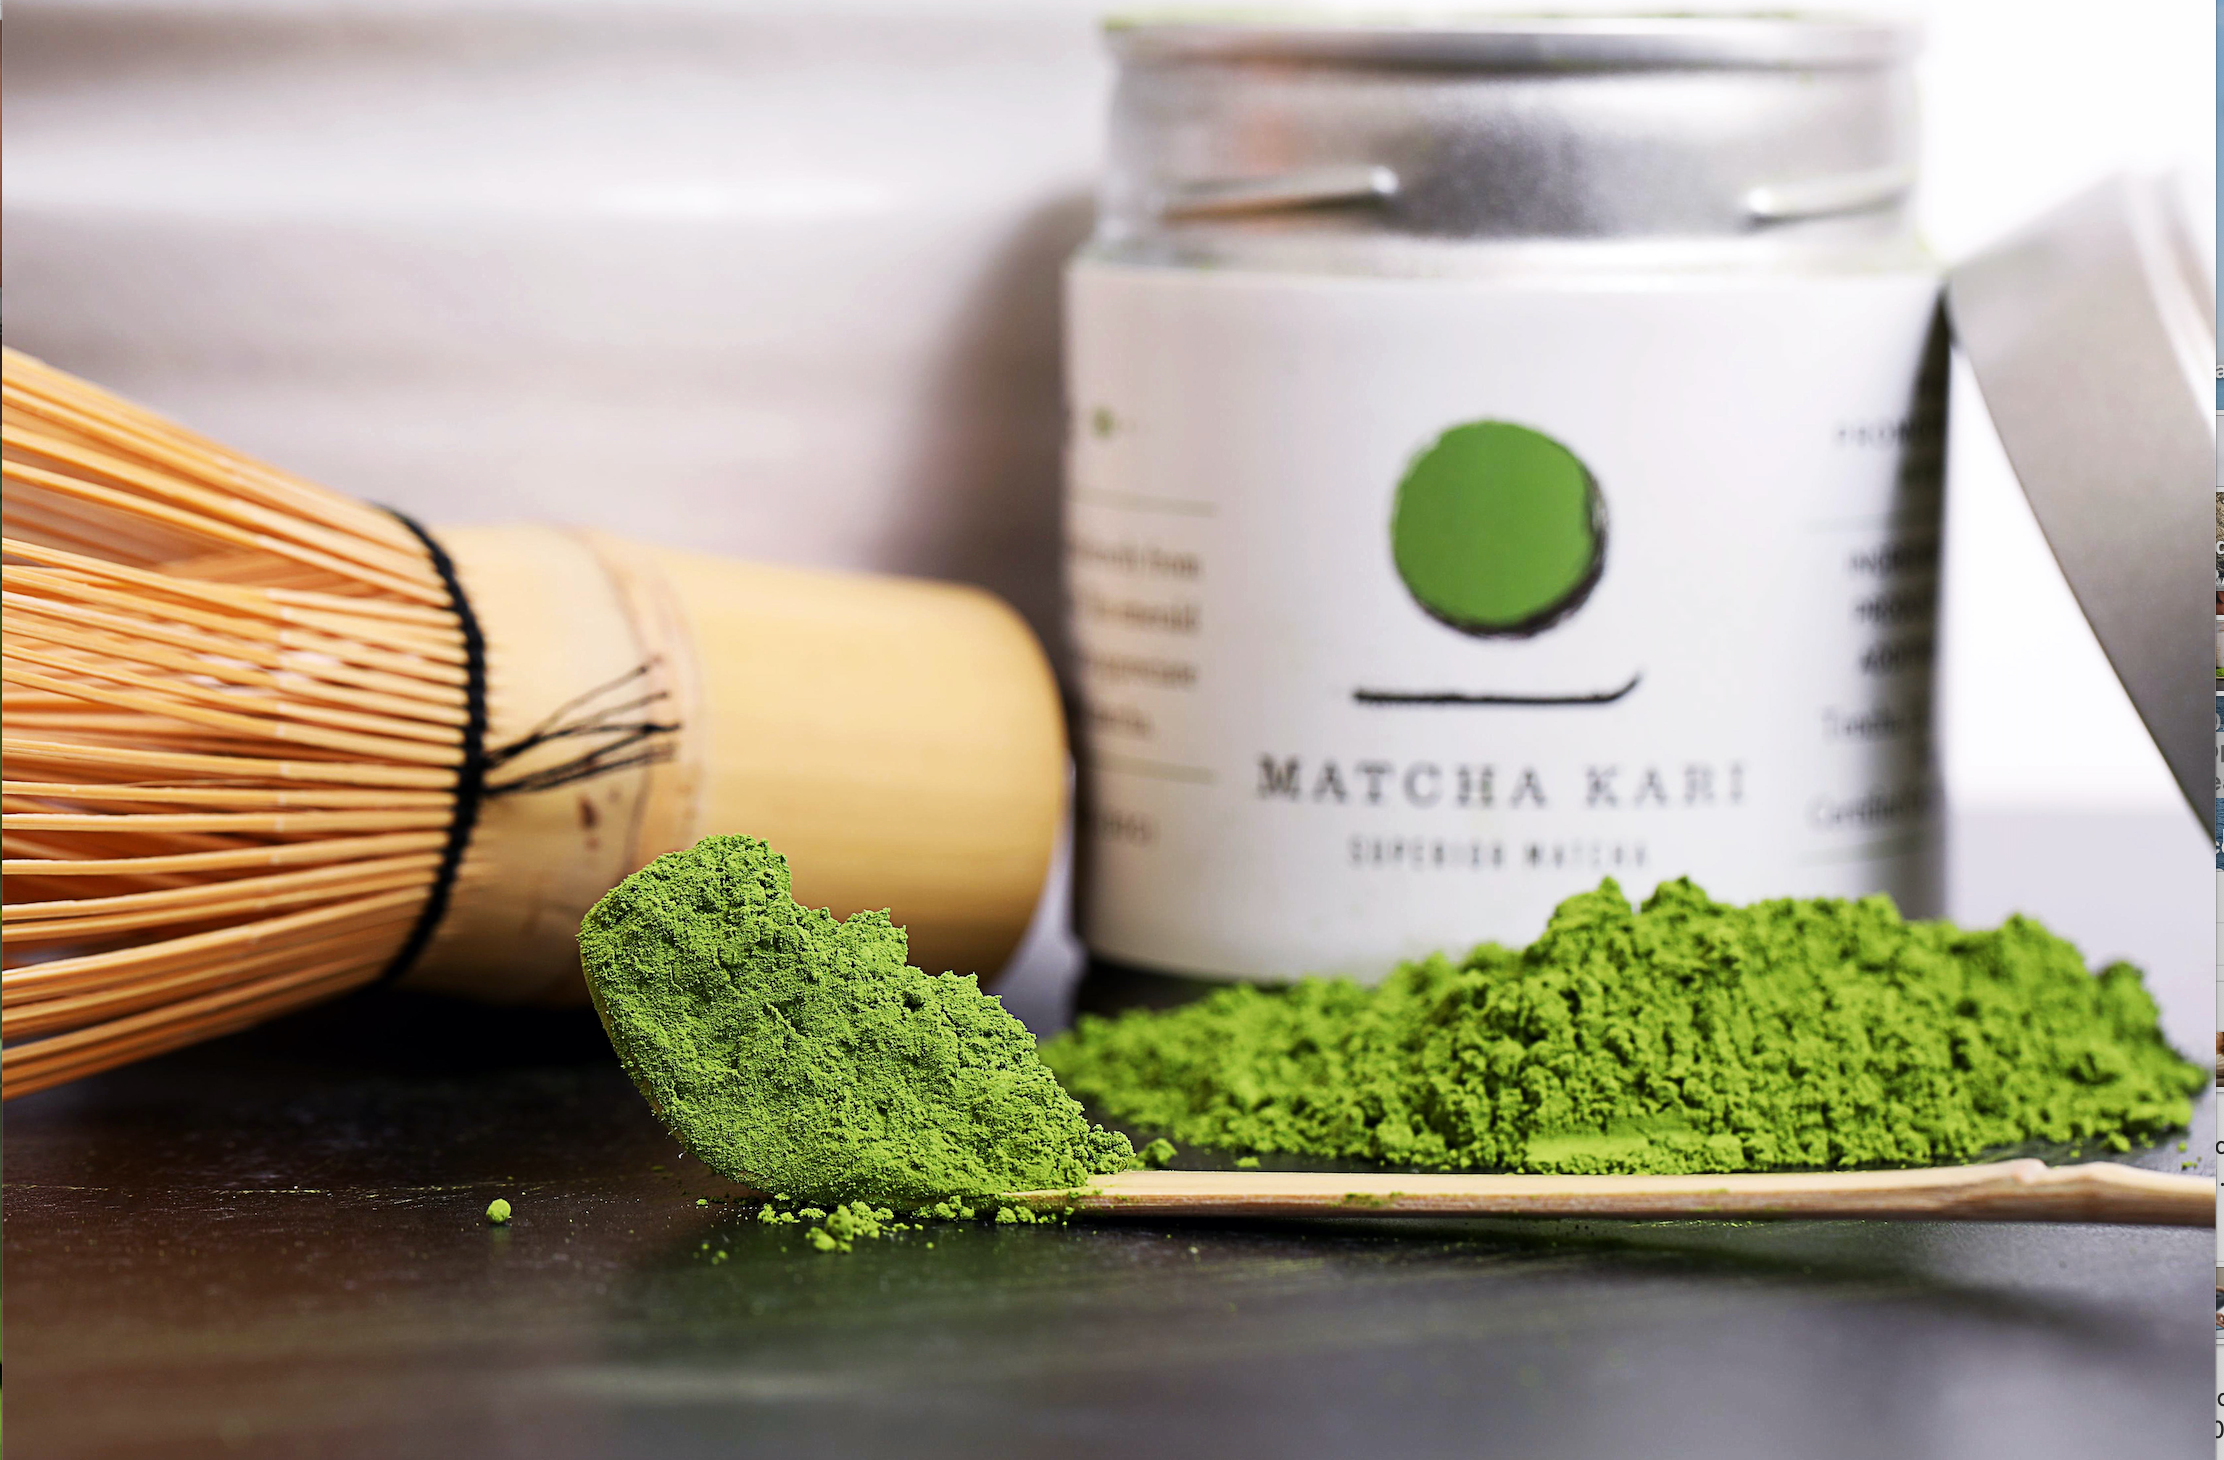 Matcha green tea for cholesterol